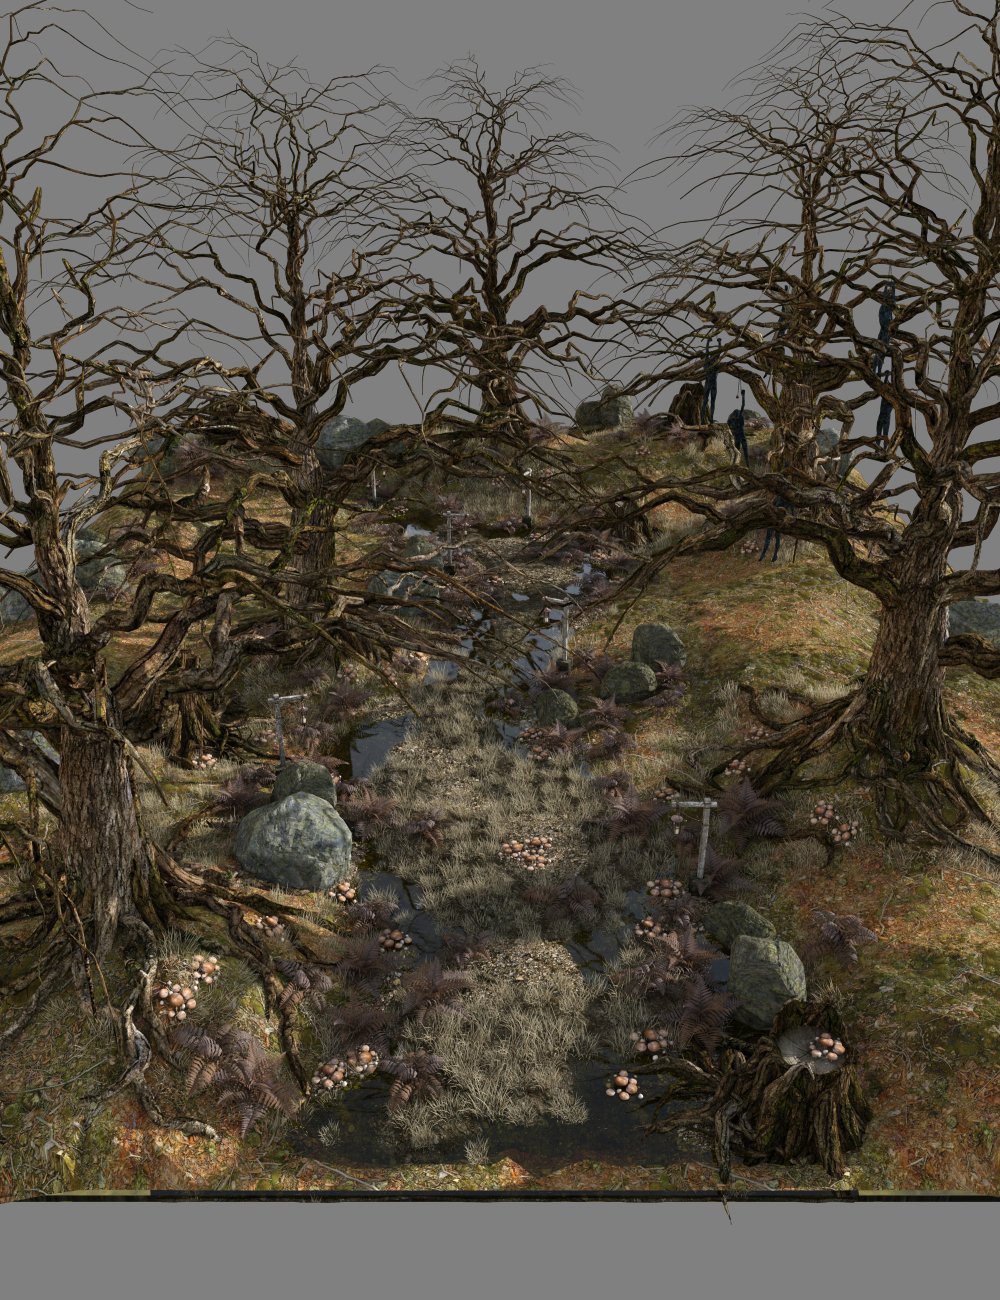 The Dark Forest by: Merlin Studios, 3D Models by Daz 3D